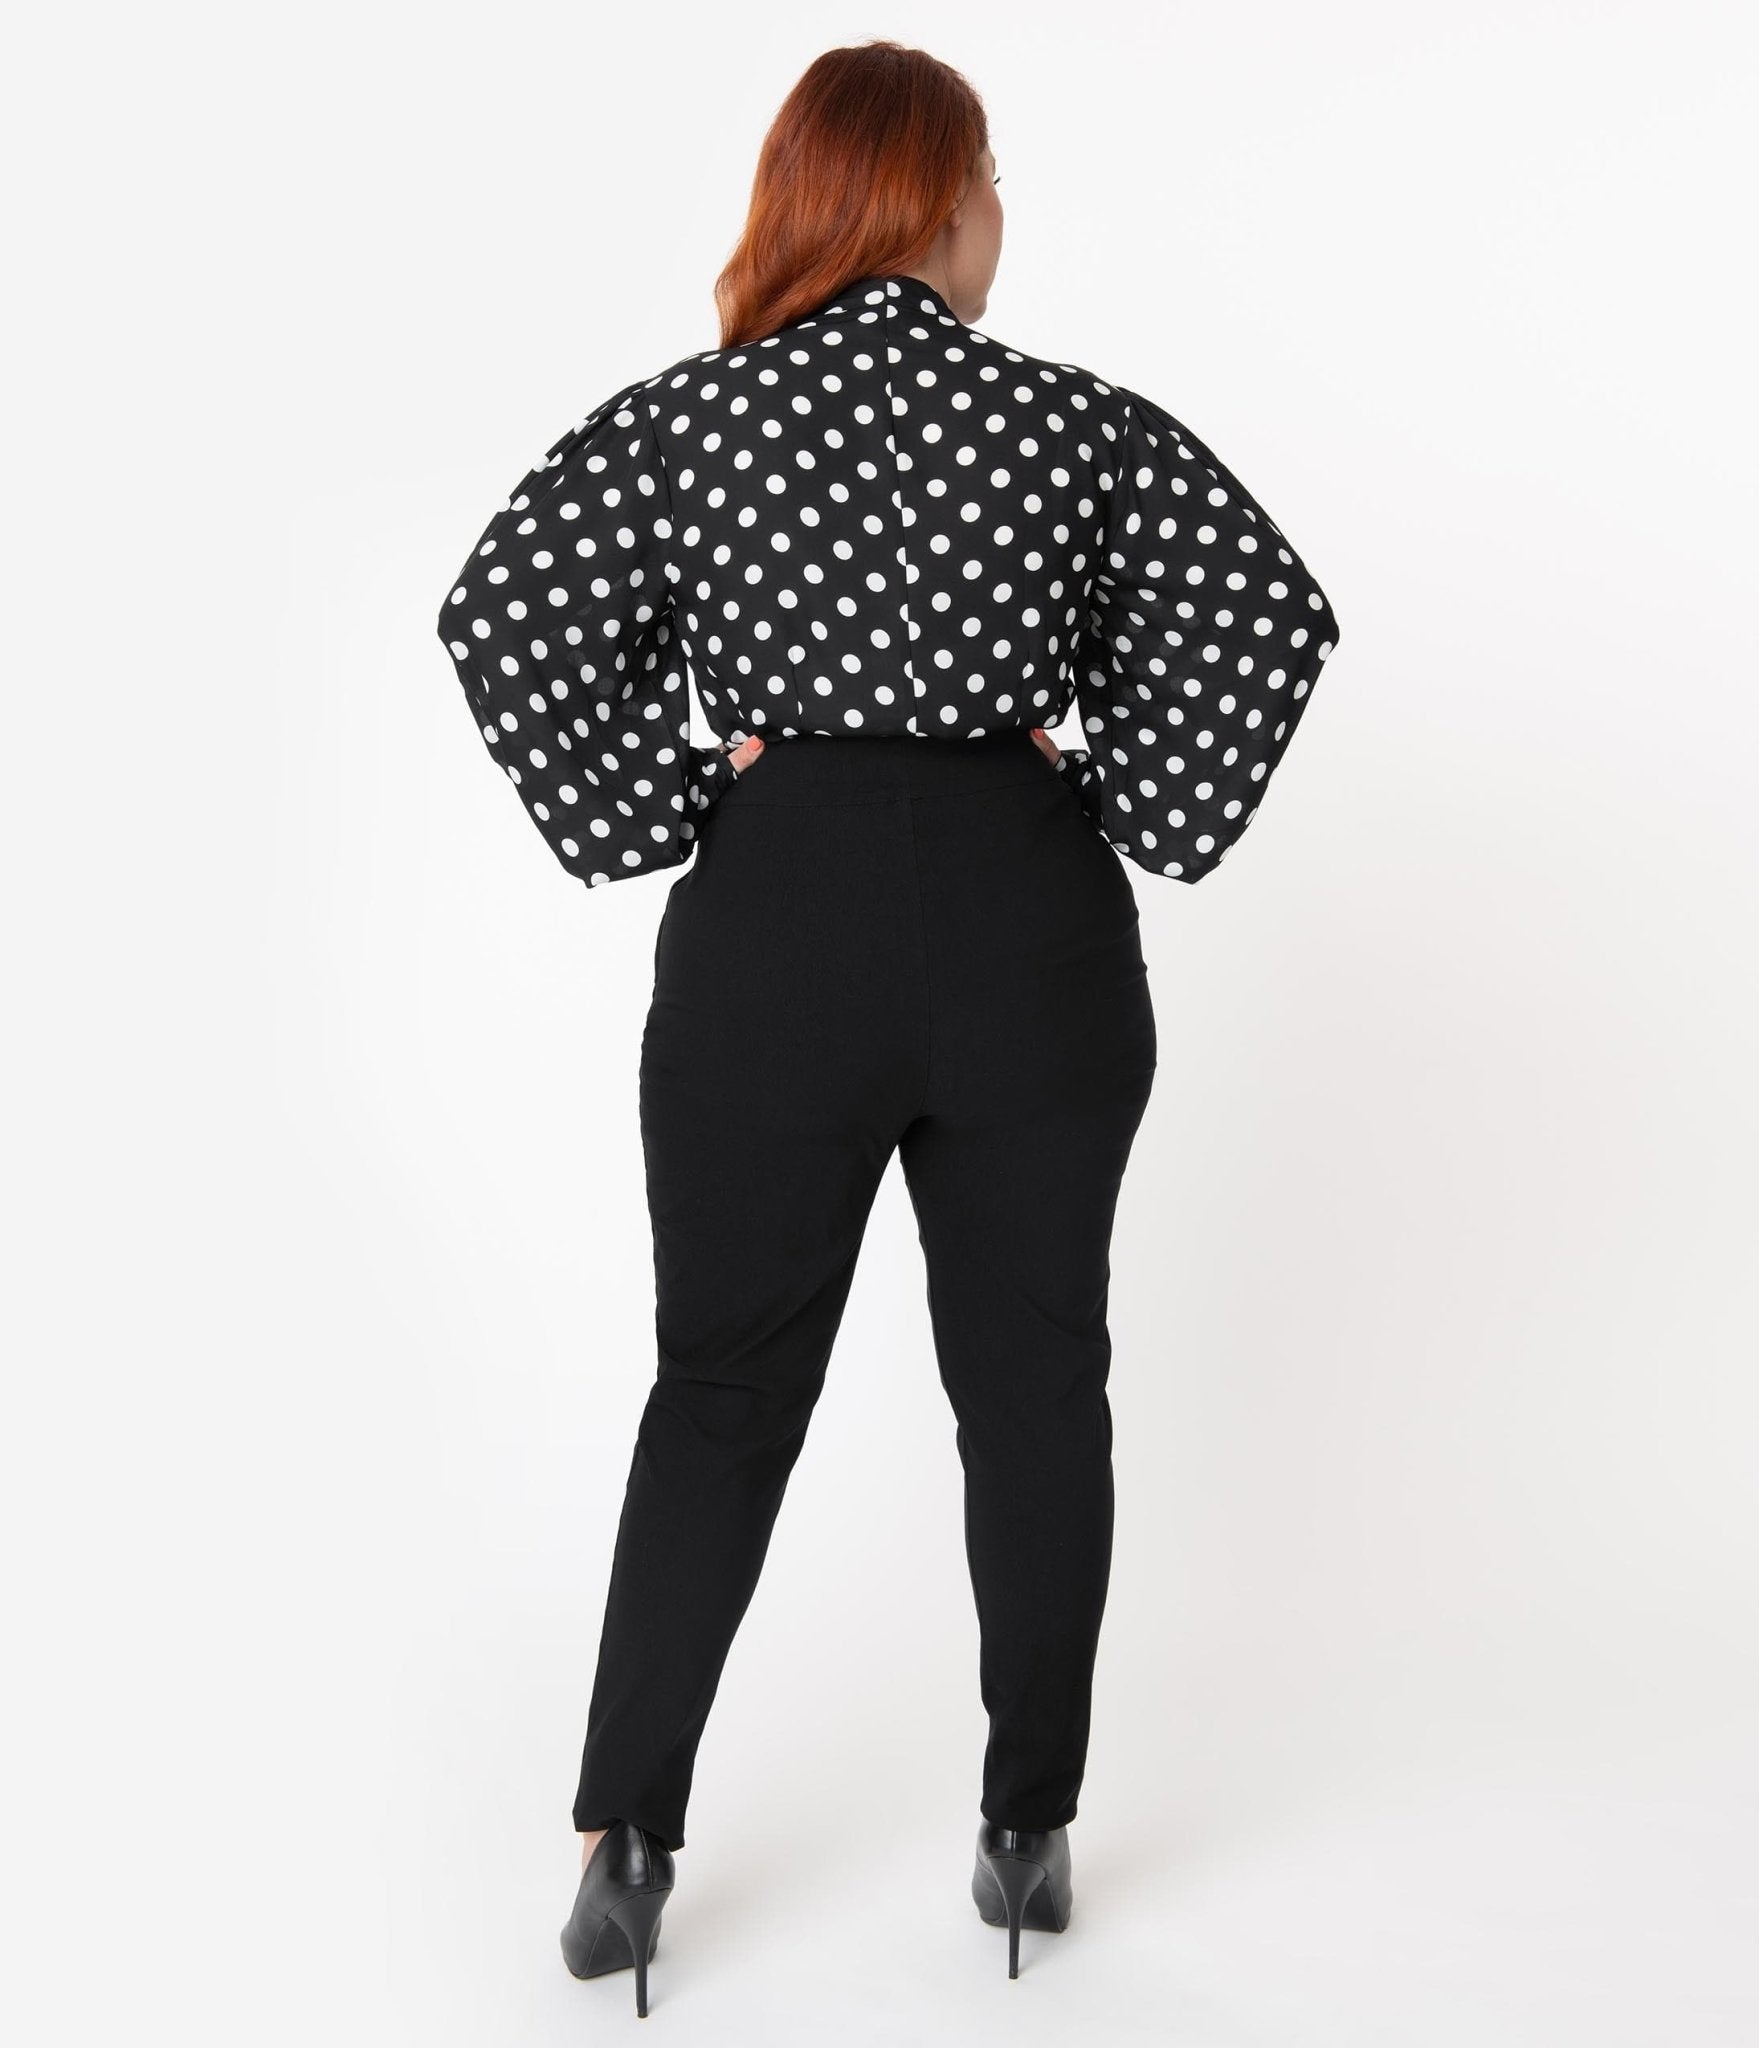 Terra & Sky Women's Plus Size Comfort Elastic Waistband Ponte Pant -  Walmart.com